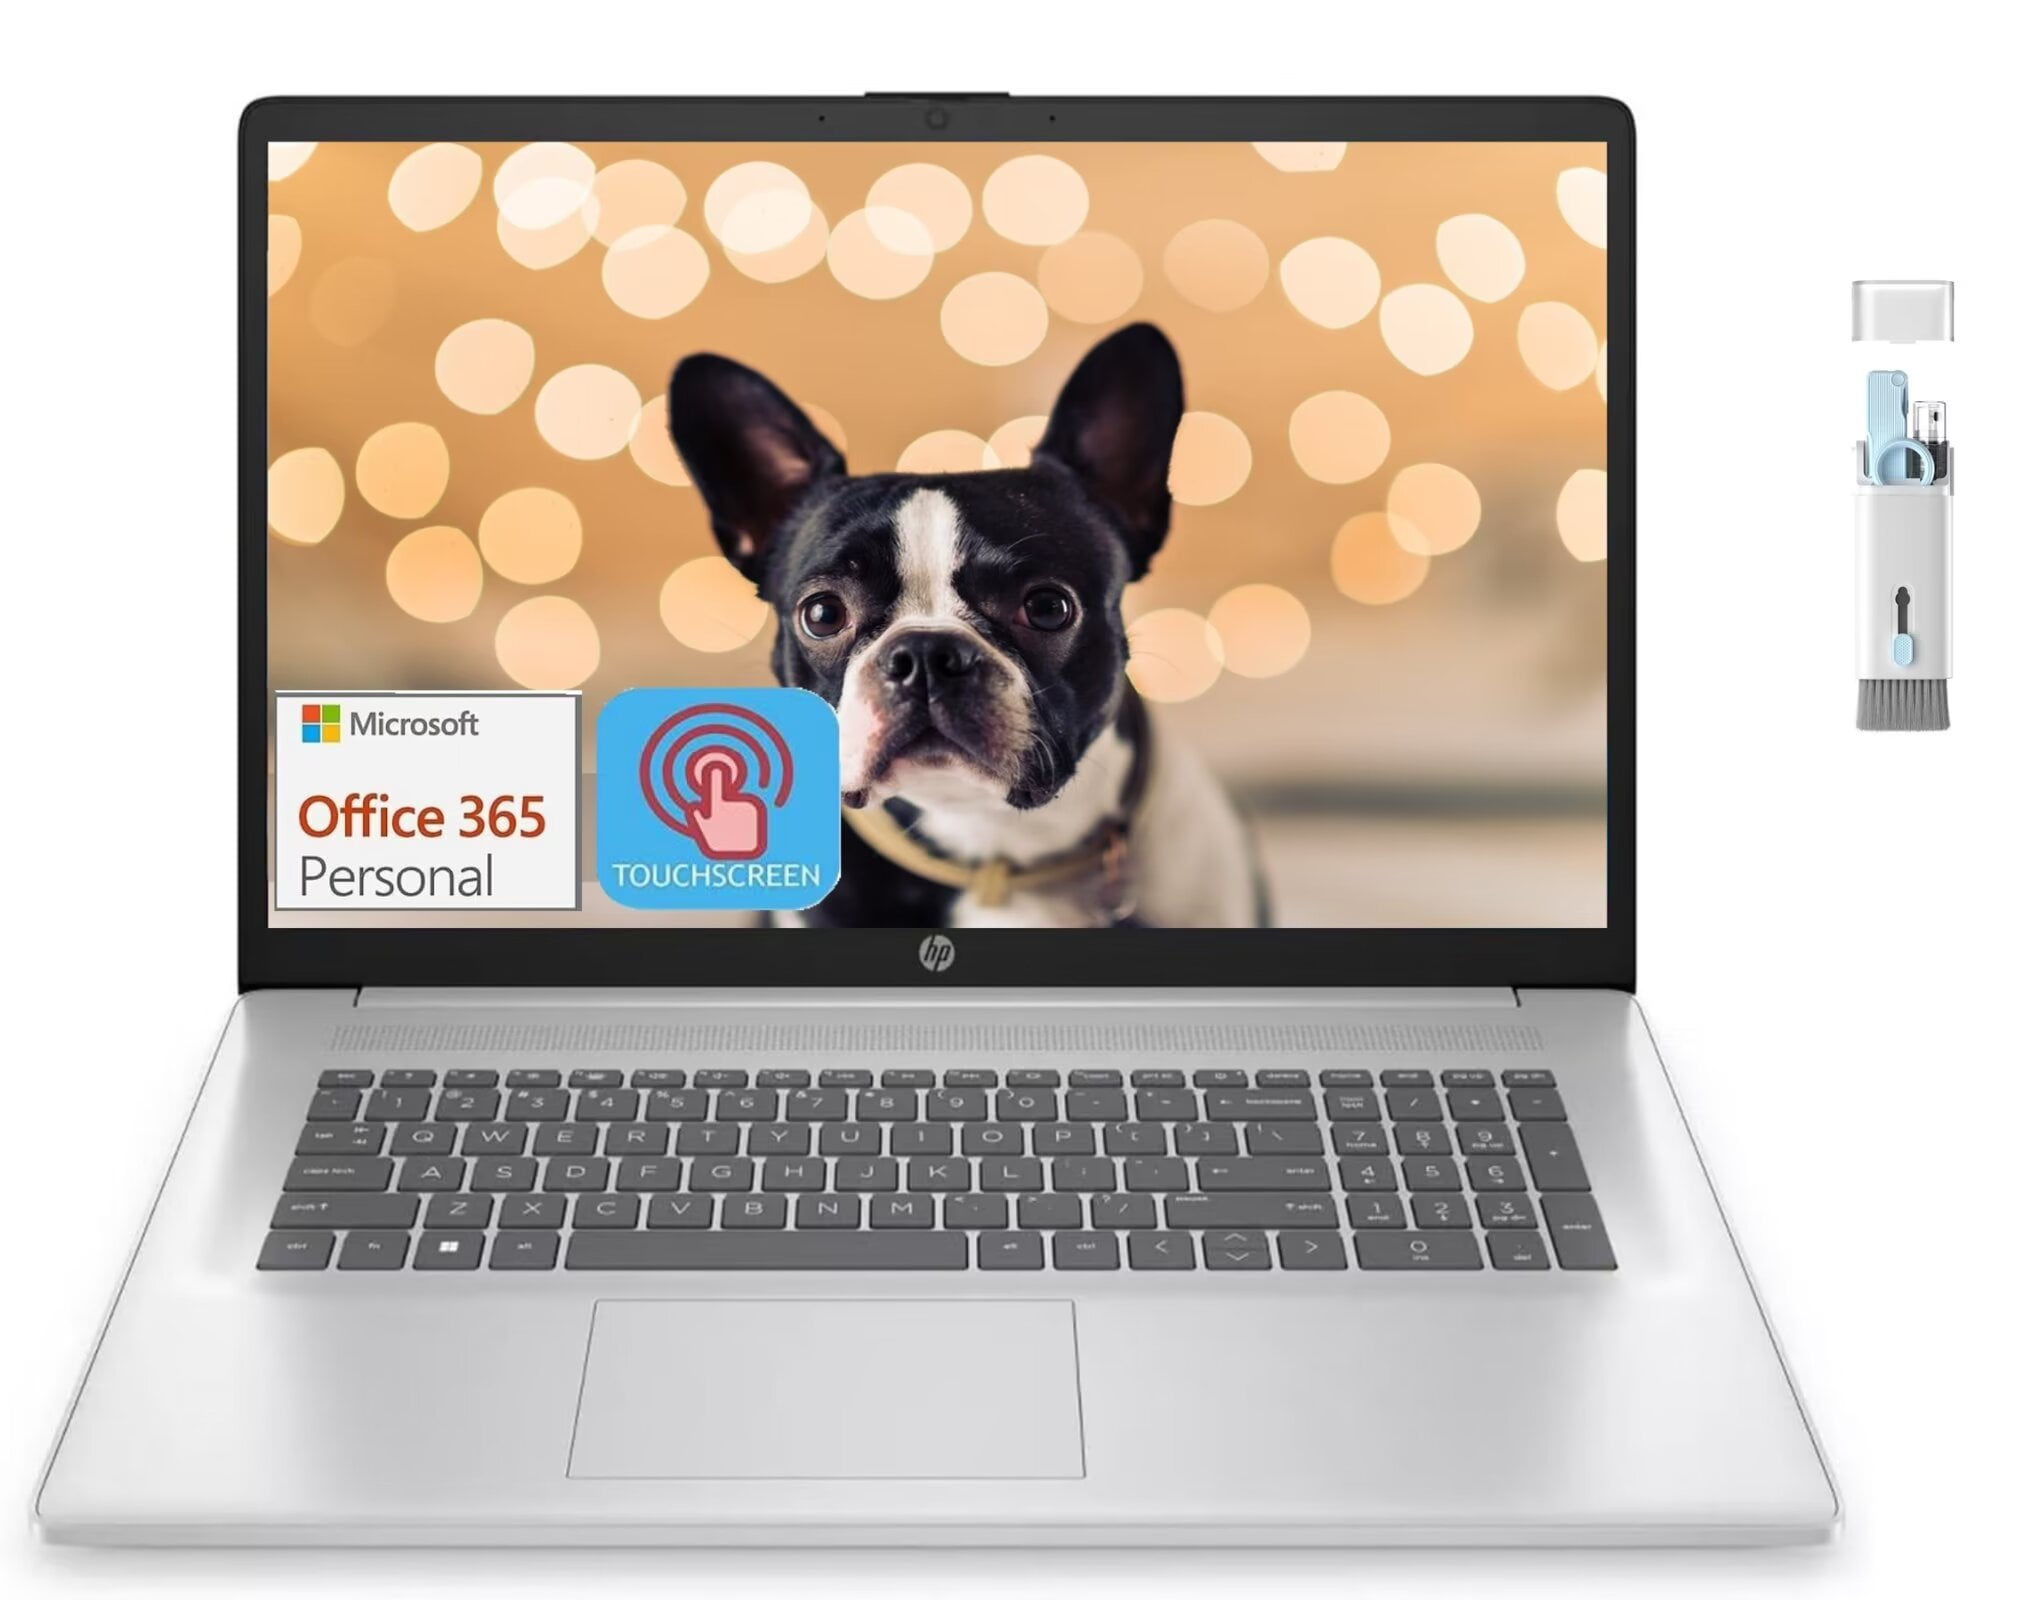 HP Pavilion 17-g108nf, PC portable 17 pouces Full HD IPS mat Skylake à 899€  – LaptopSpirit